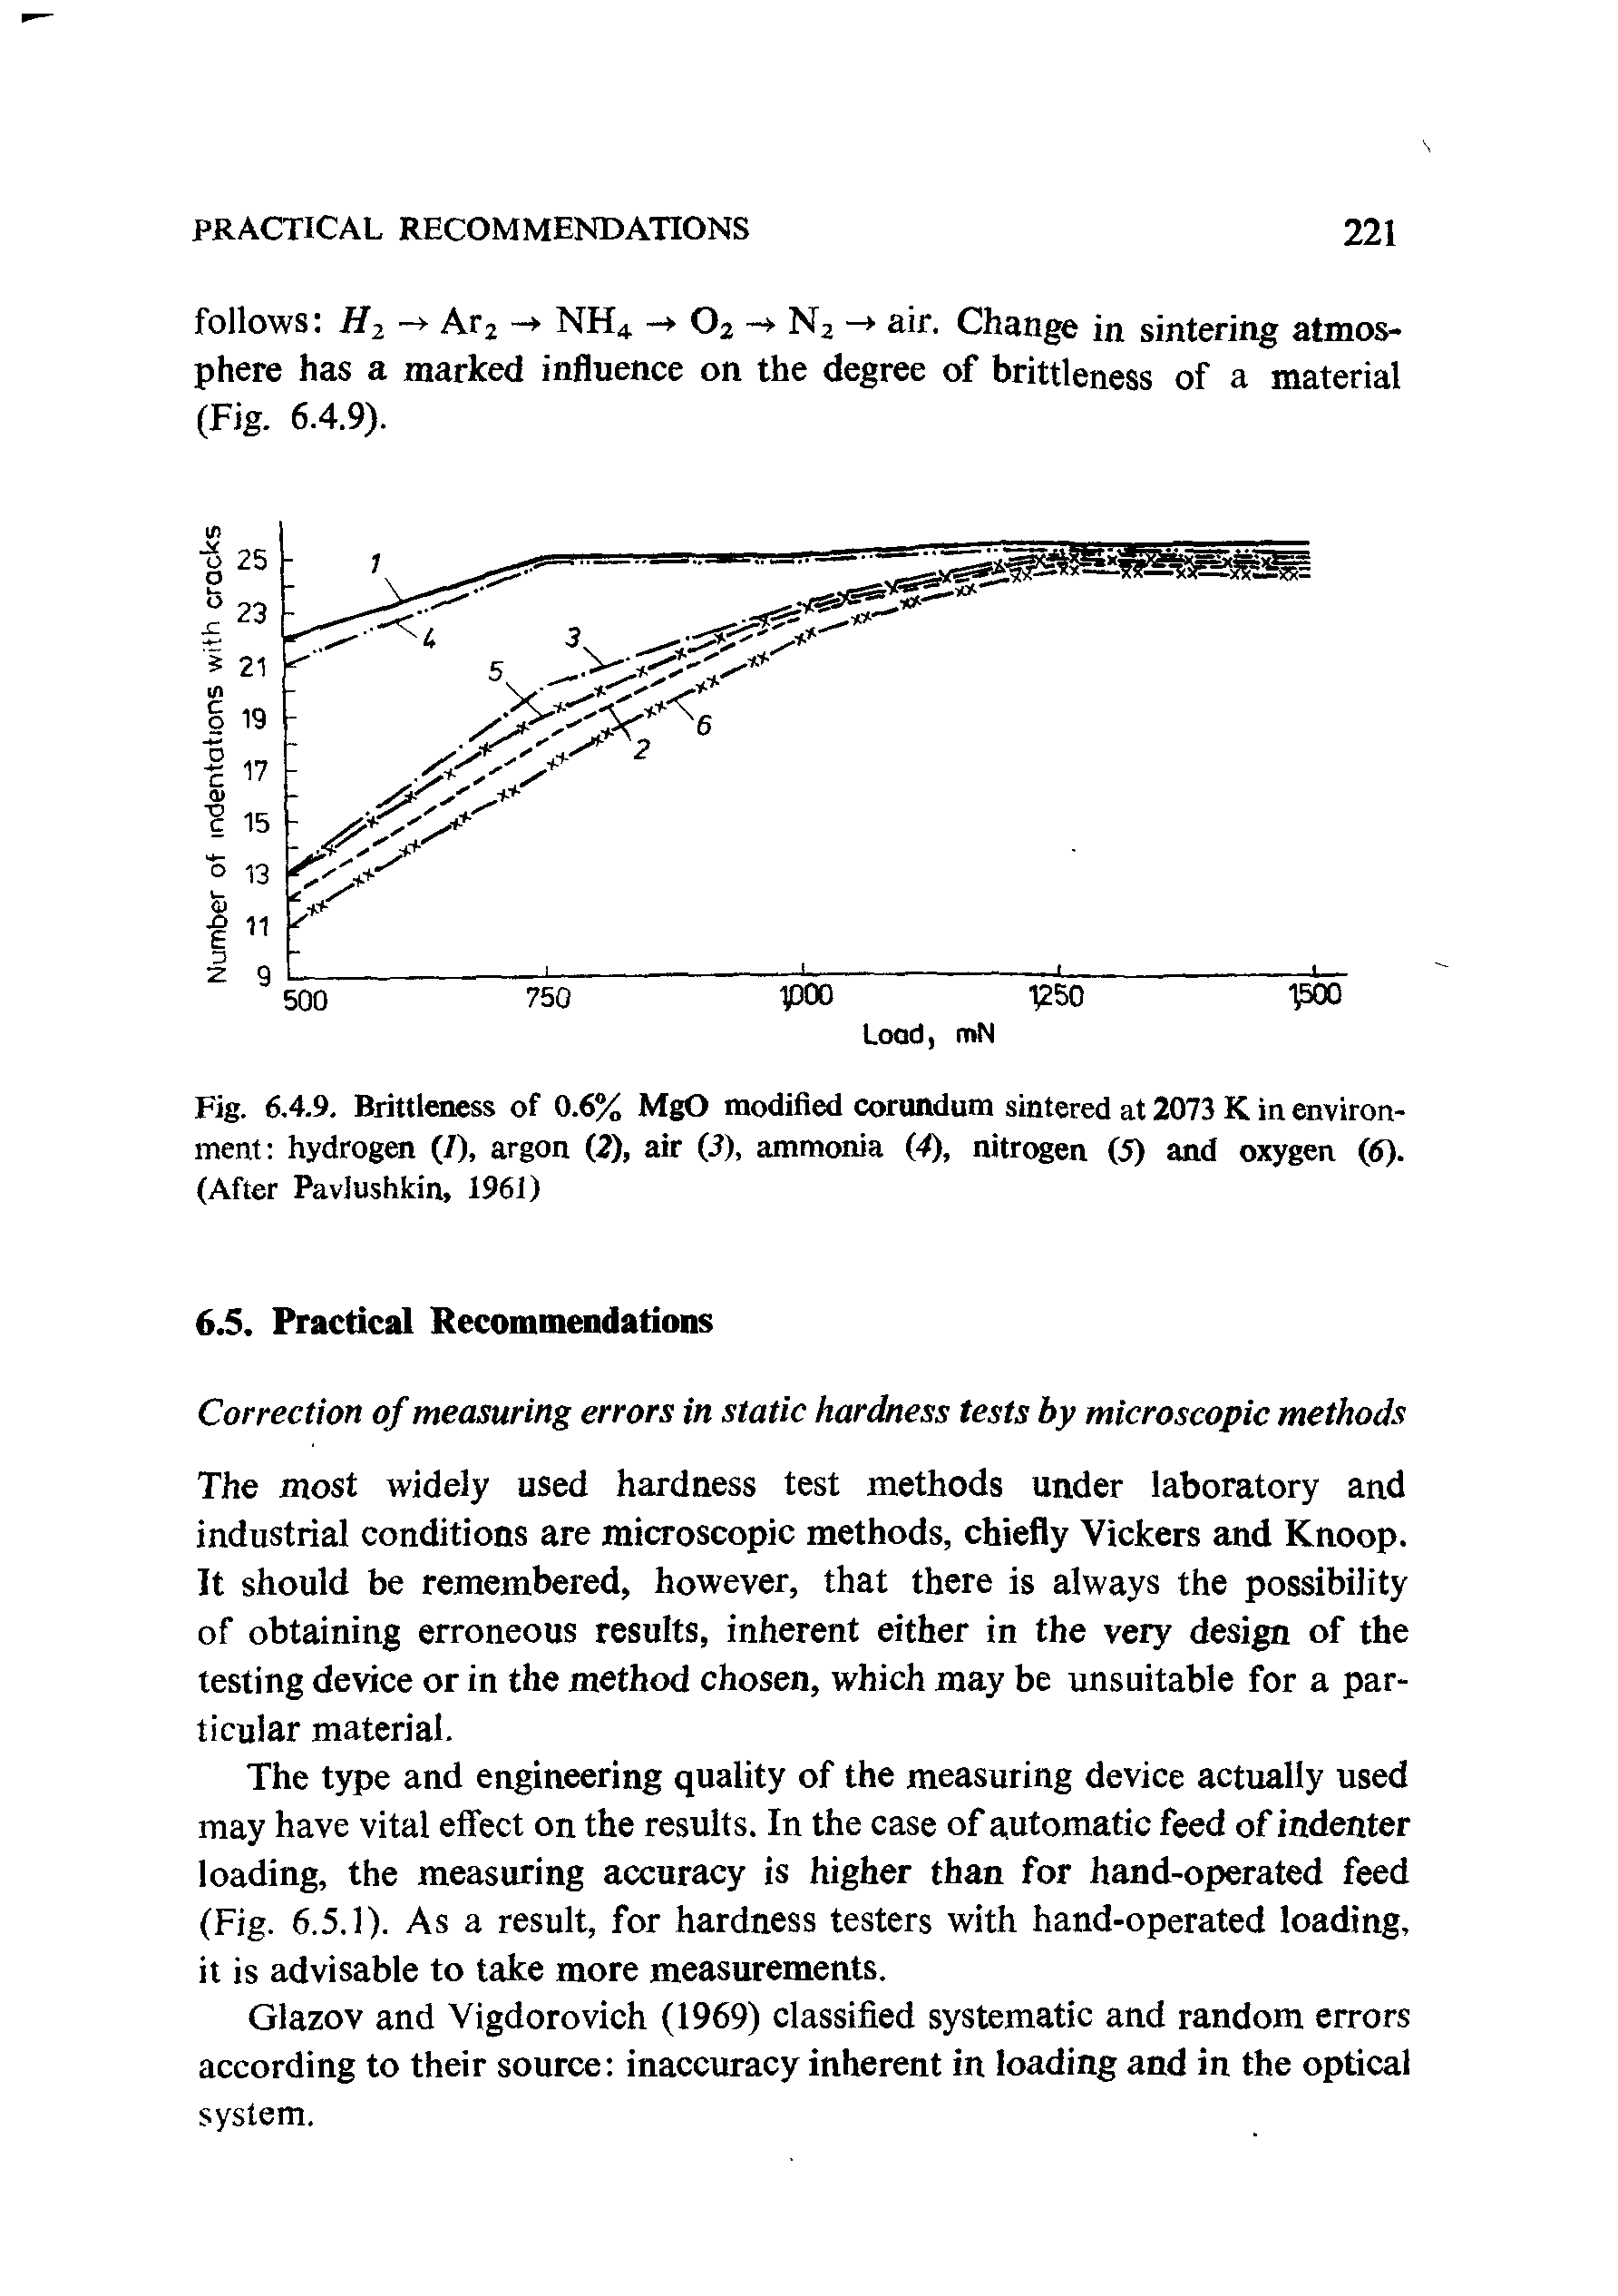 Fig. 6.4.9. Brittleness of 0.6% MgO modified corundum sintered at 2073 K in environment hydrogen (/), argon (2), air (3), ammonia (4), nitrogen (5) and oxygen (6). (After Pavlushkin, 1961)...